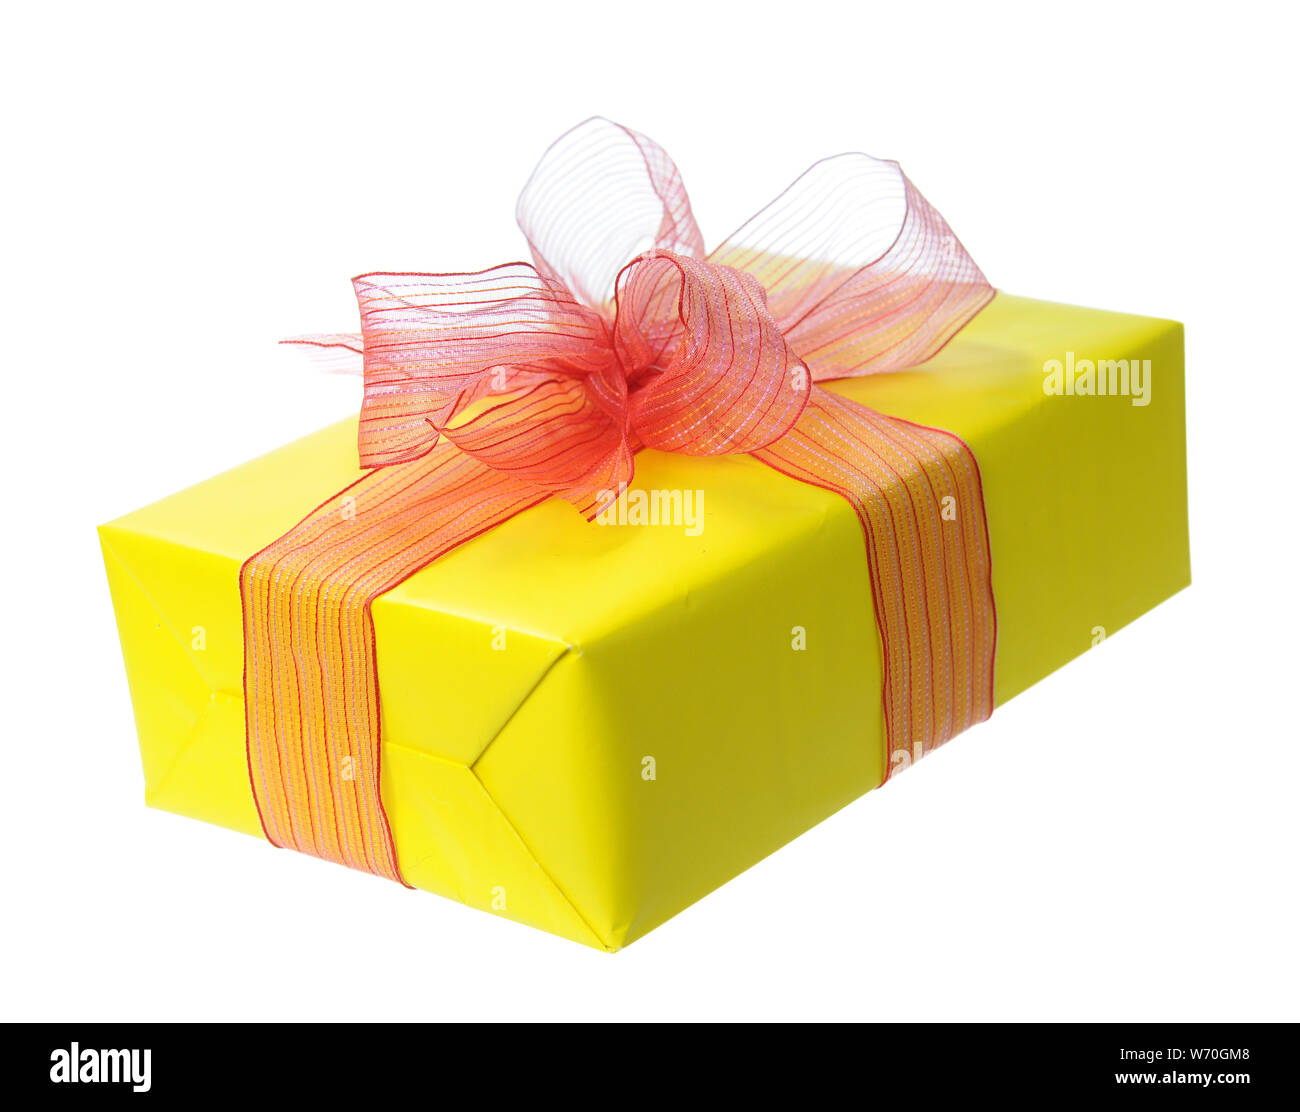 Yellow gift box isolated on white Stock Photo